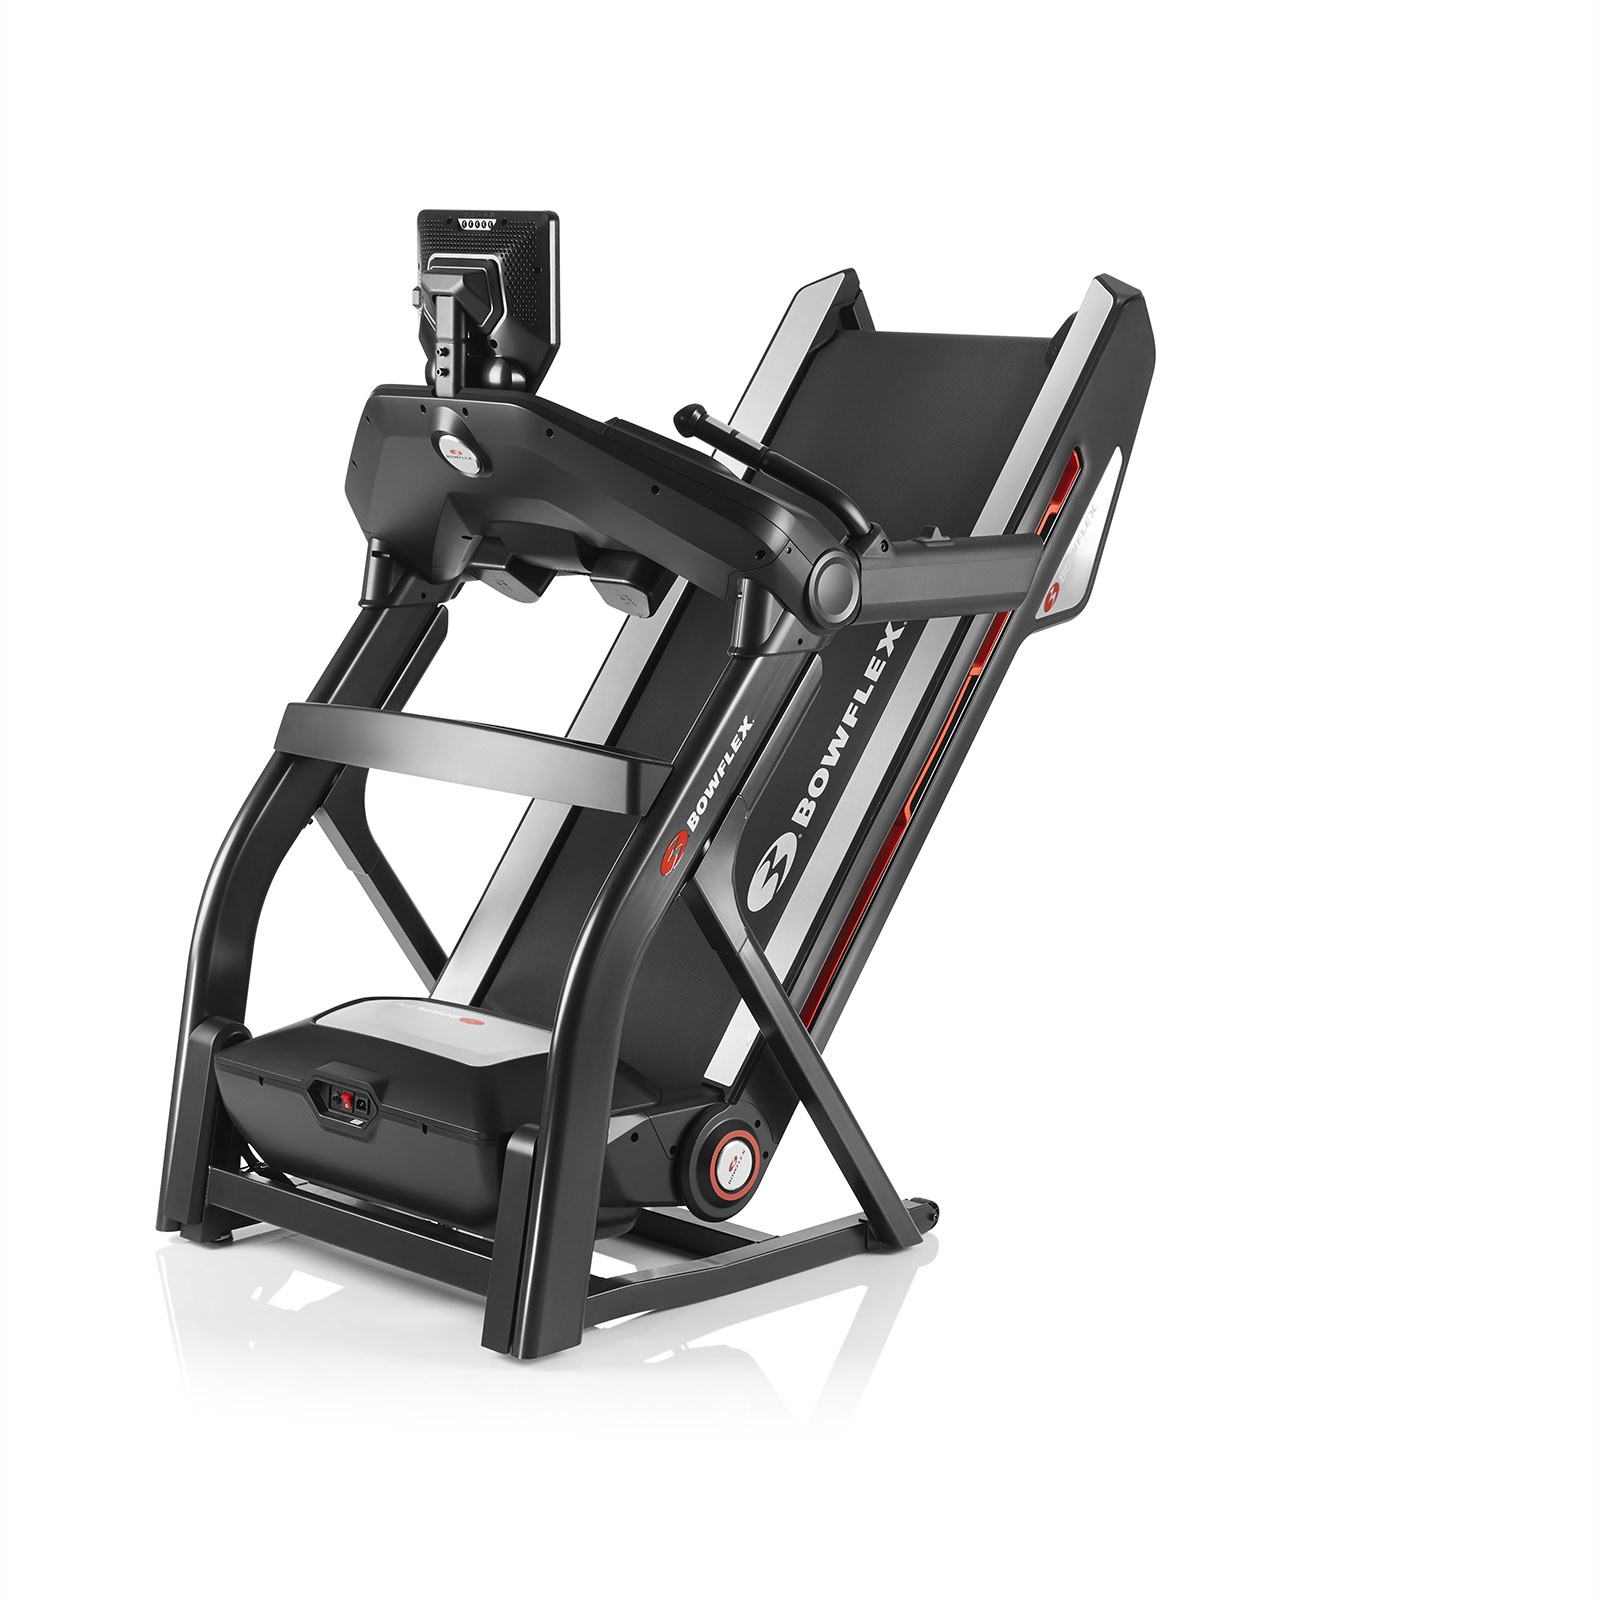 Bowflex Treadmill 25 folded